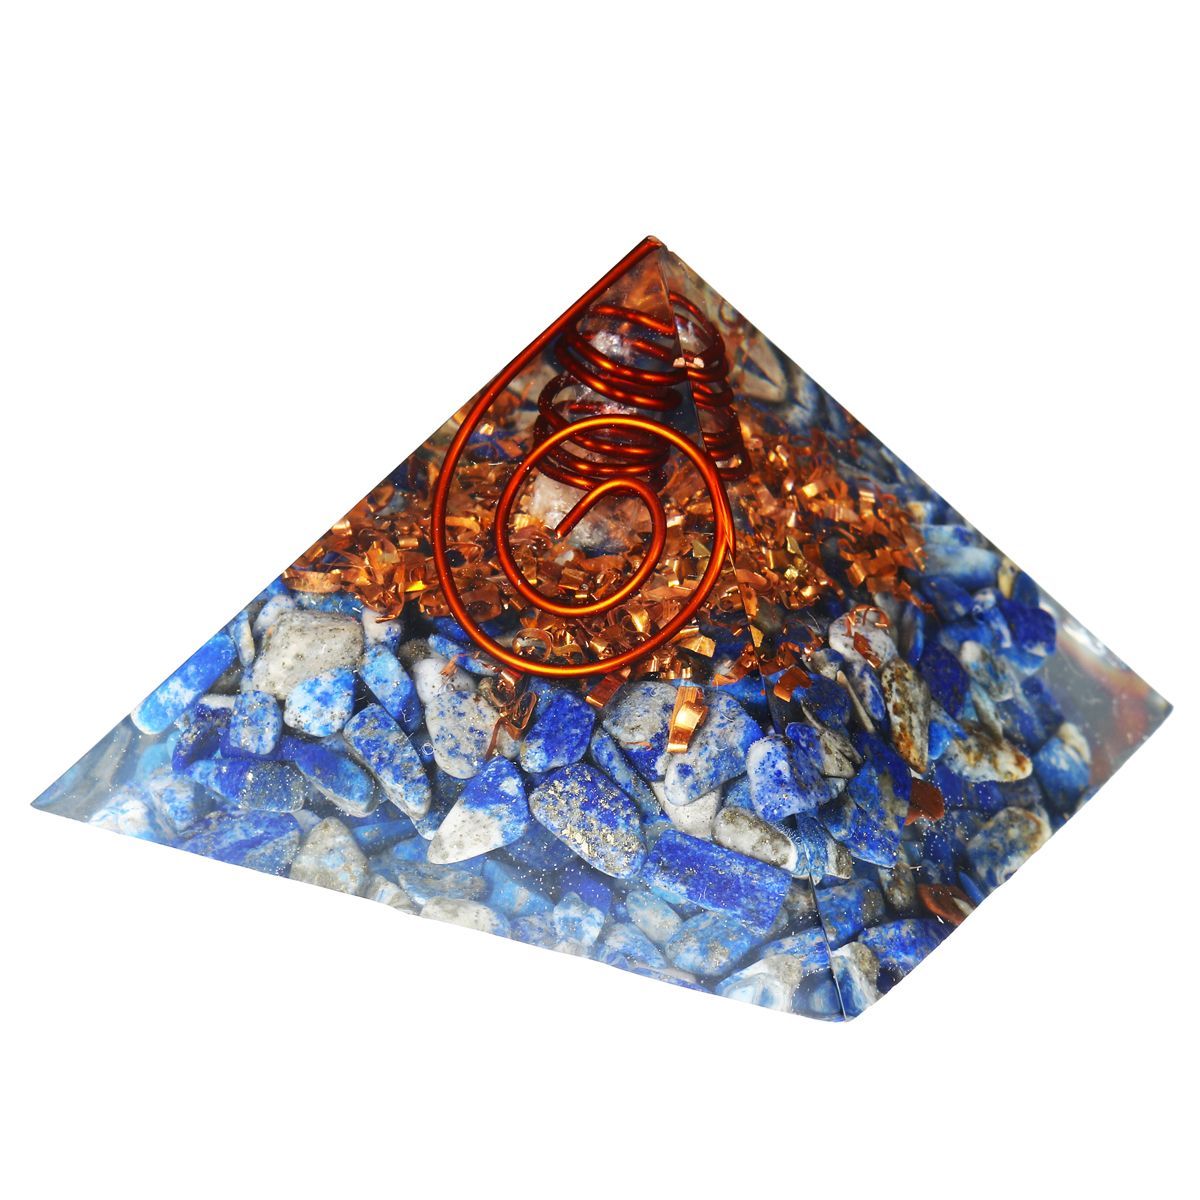 Pyramid-Crystal-Gemstone-Meditation-Yoga-Energy-Healing-Stone-Home-Desk-Decorations-1426209